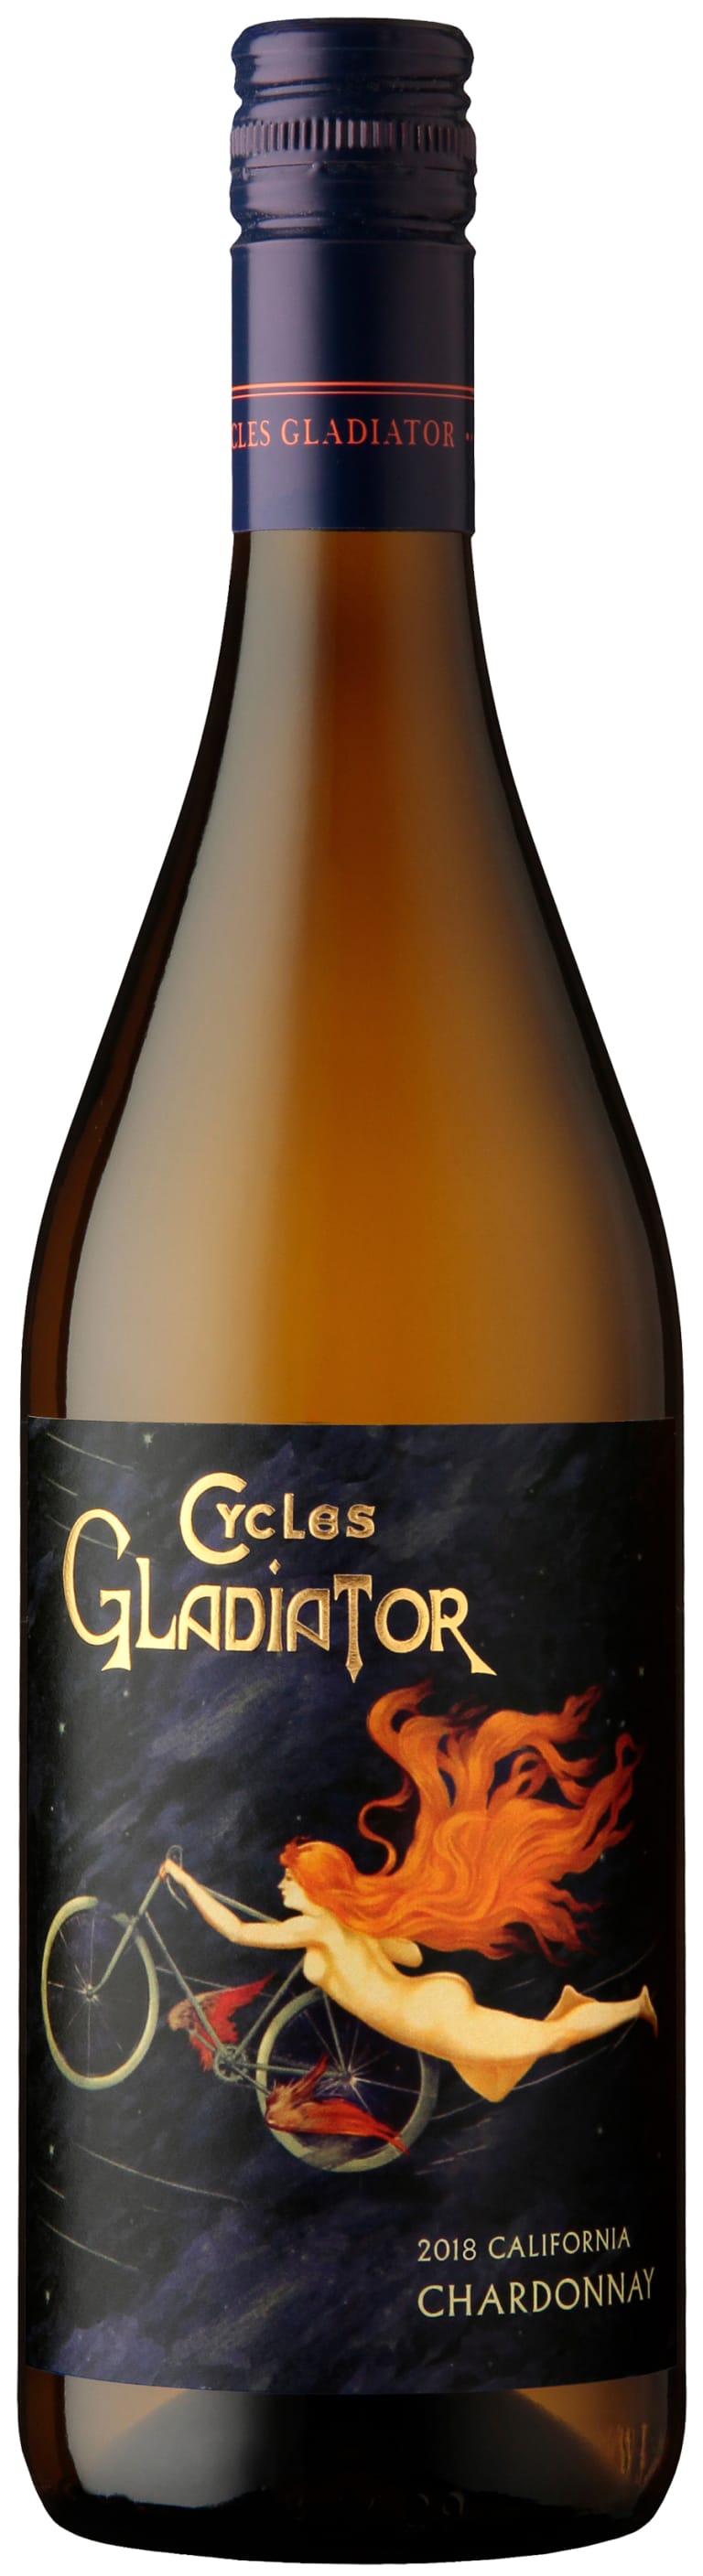 Cycles Gladiator Chardonnay 2018